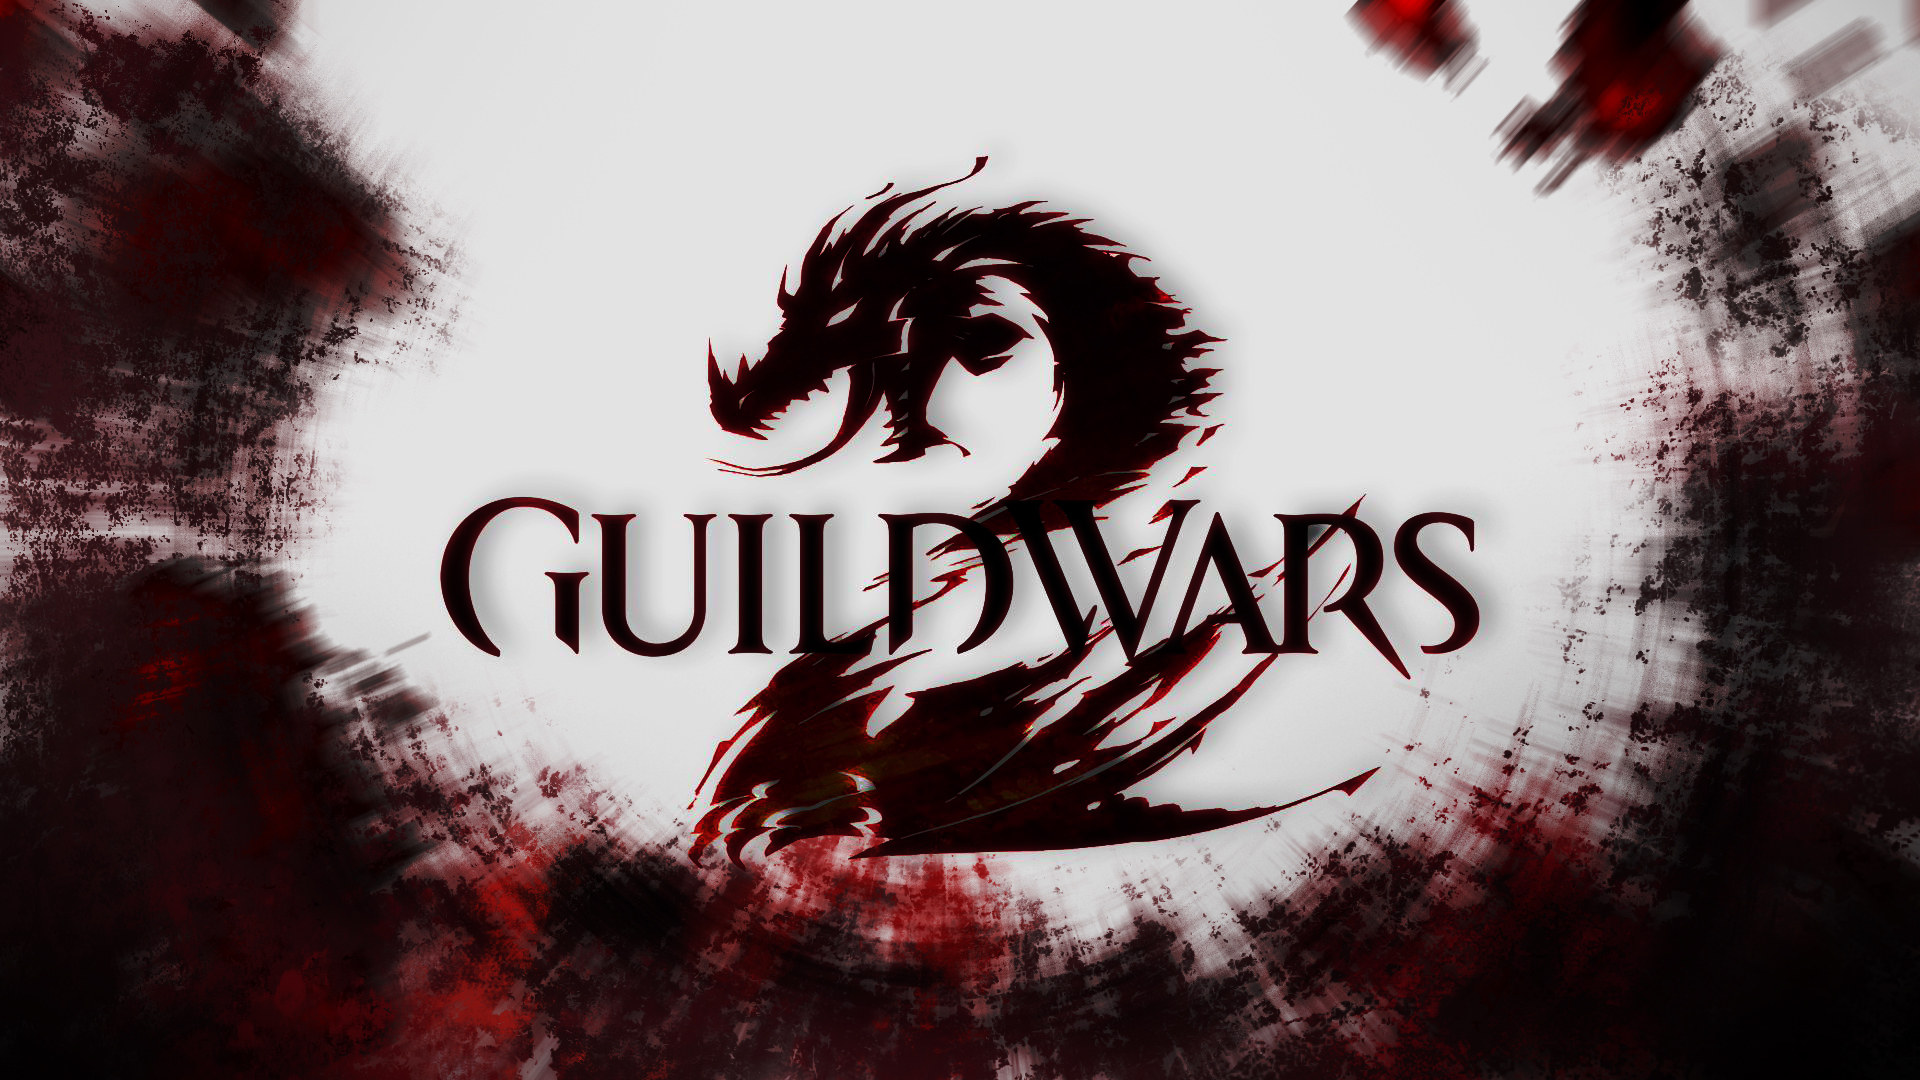 Guild Wars Wallpaper 1080p